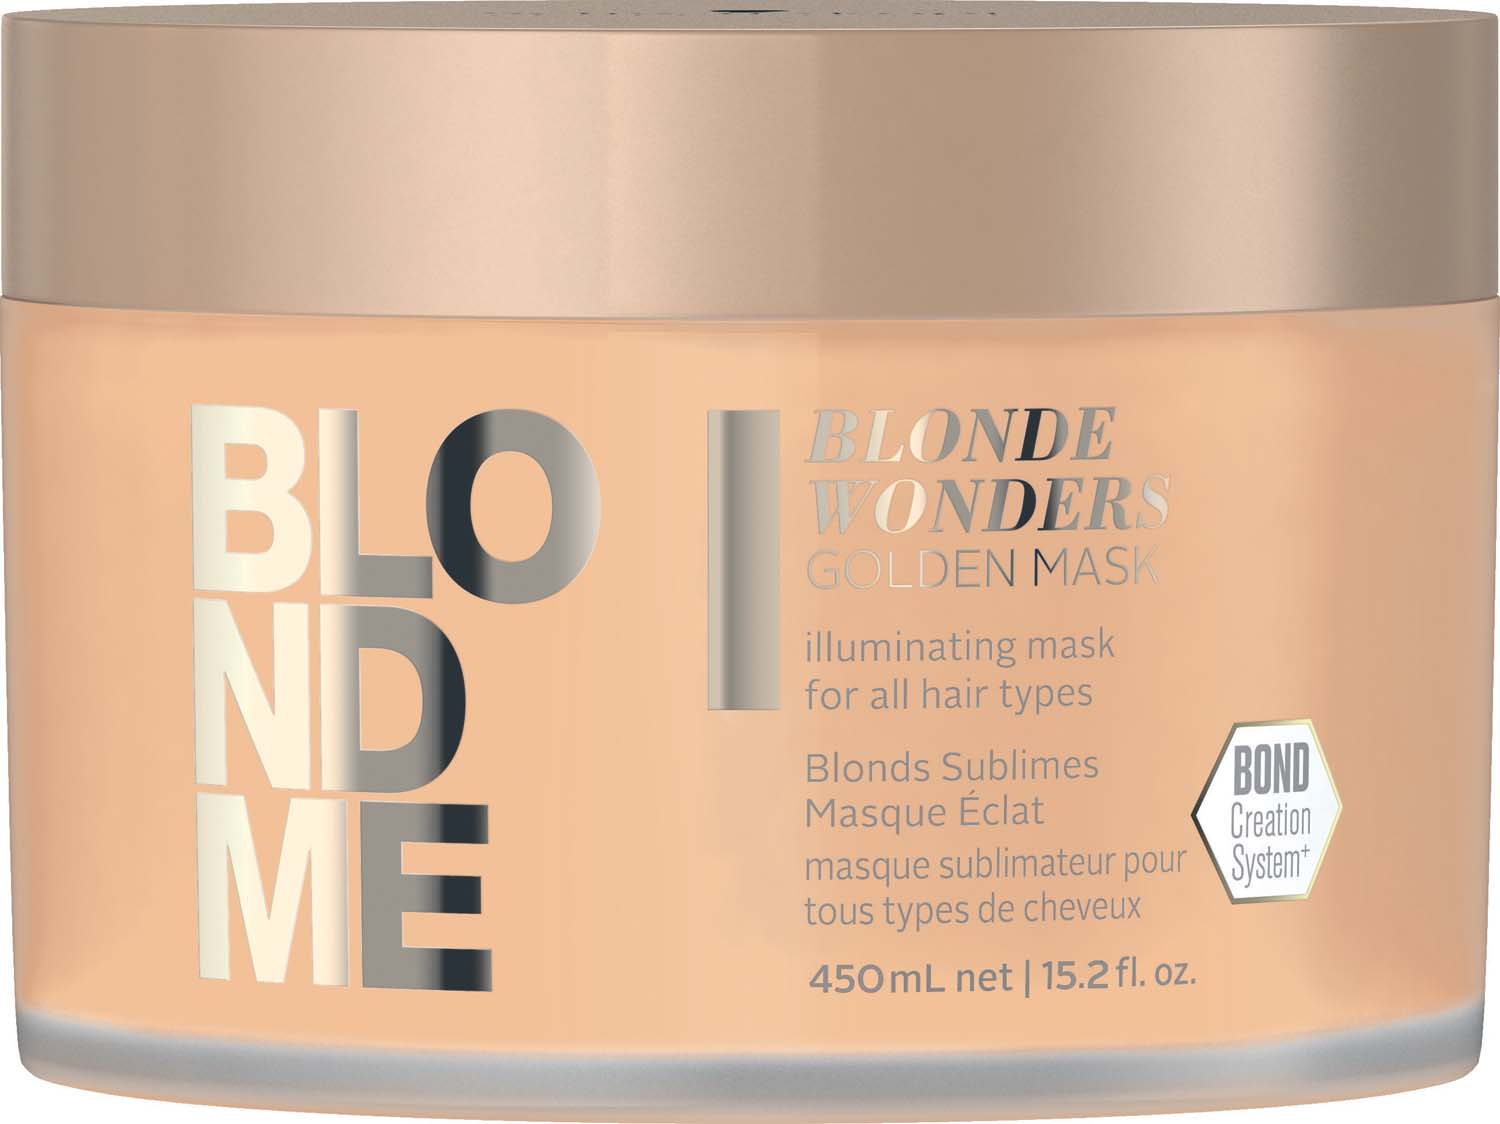 Blondme Wonders treat golden mask 450 ml